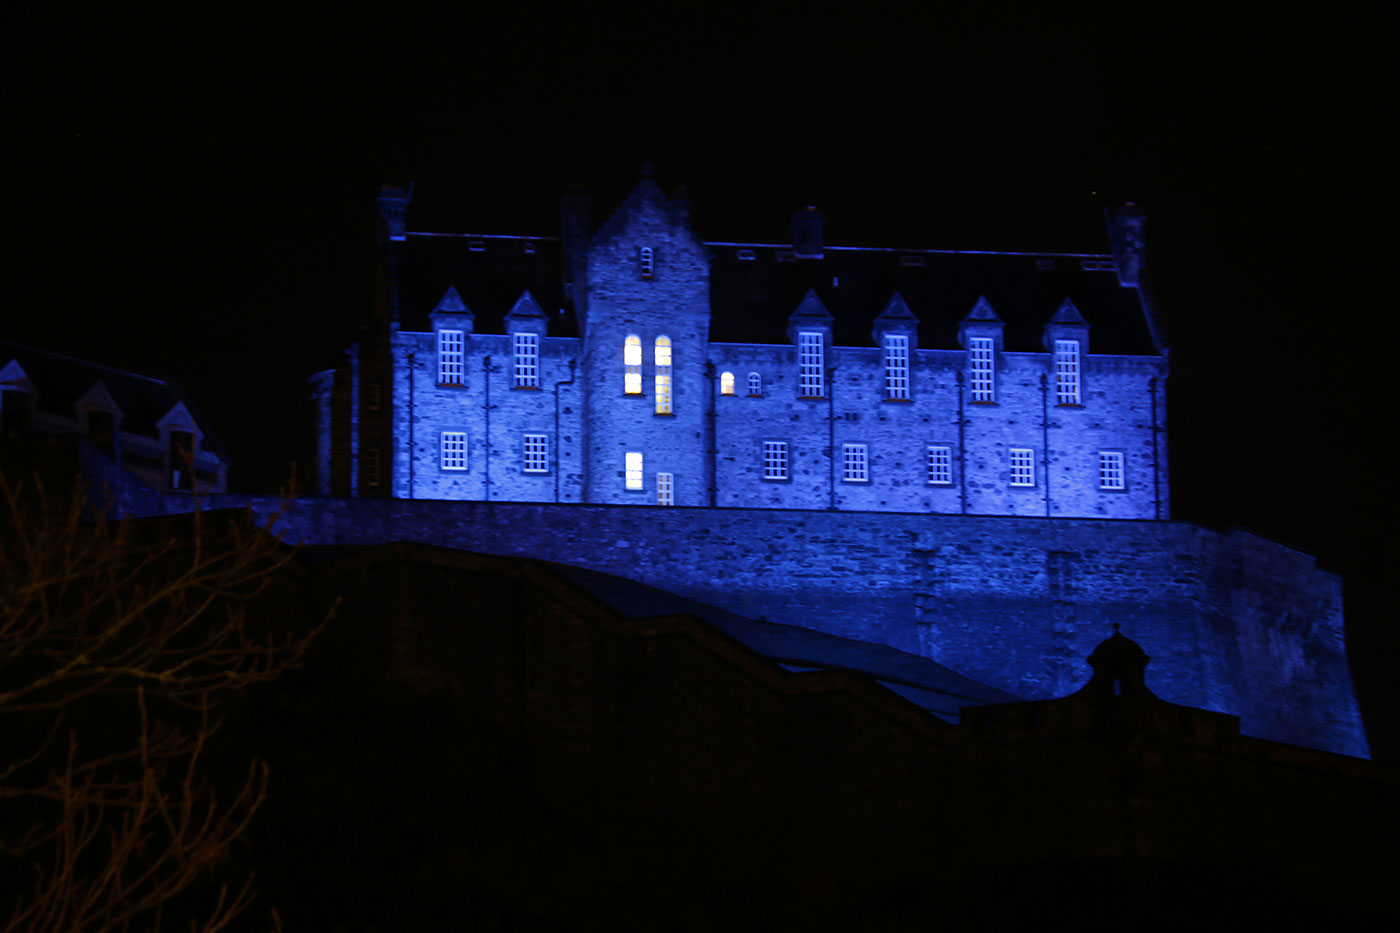 Edinburgh Castle floodlit blue to celebrate St Andrew's Day  -  Sunday November 30, 2014